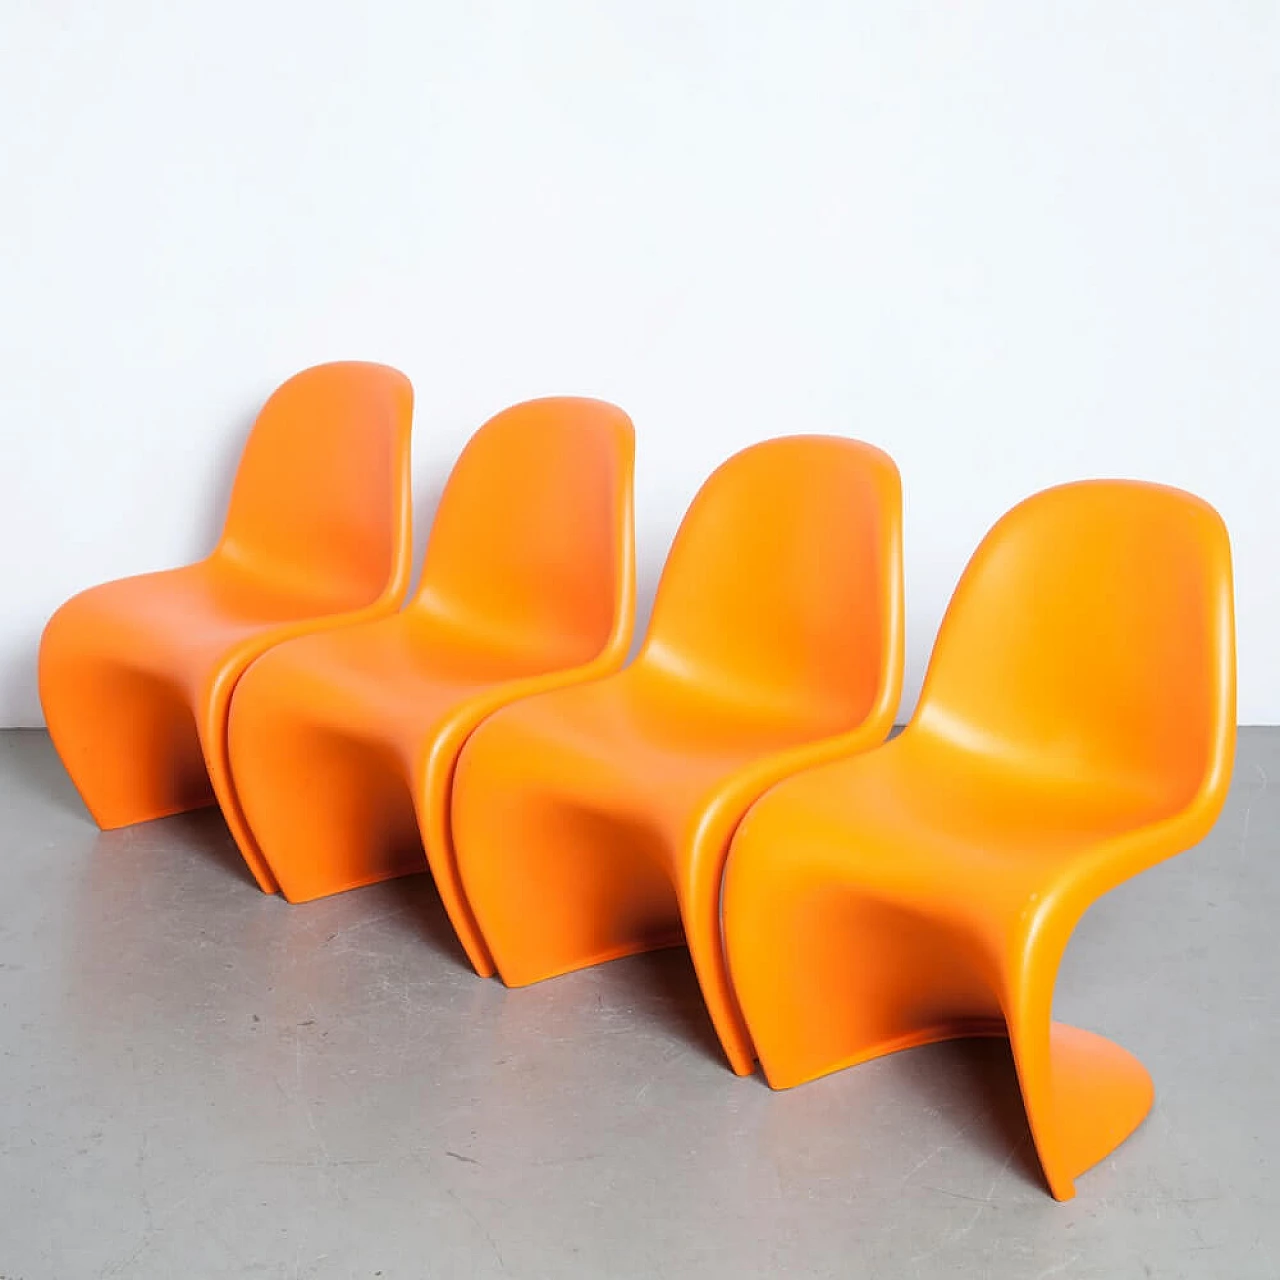 4 Orange Panton Chair S by Verner Panton for Vitra 1